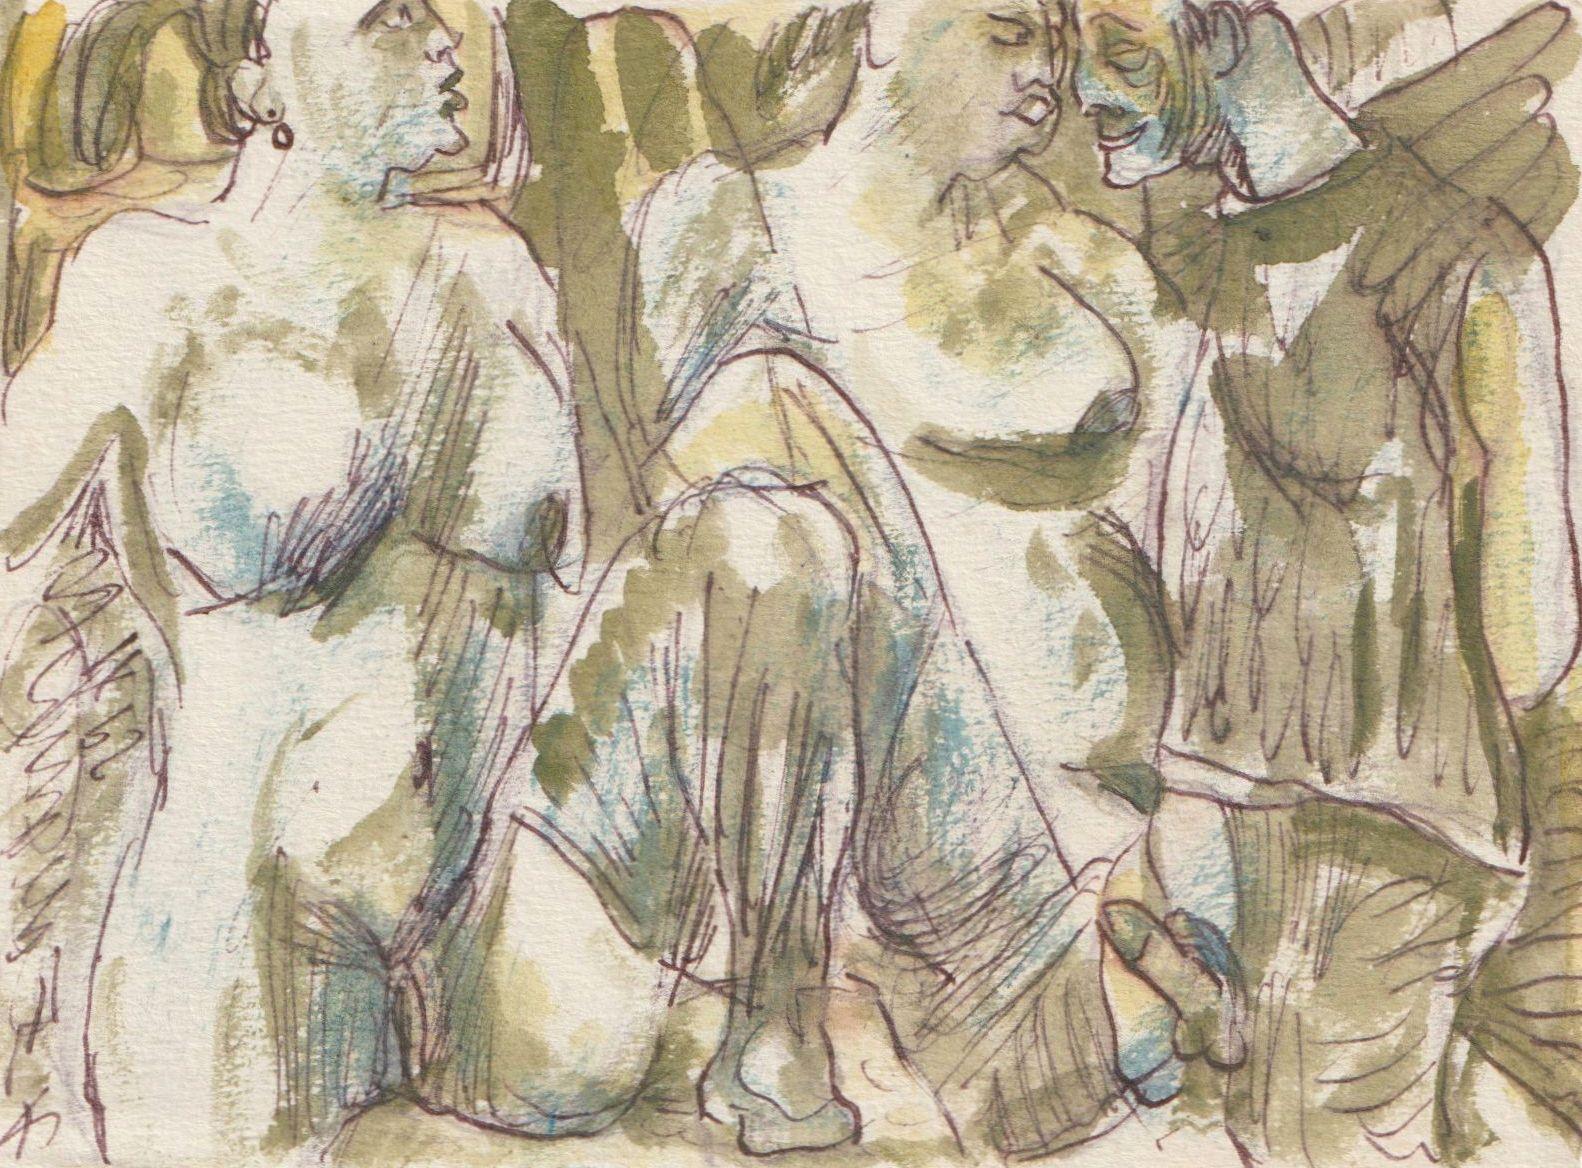 Adolfs Zardins Figurative Painting - Threesome. Paper, mixed media, 10x14 cm